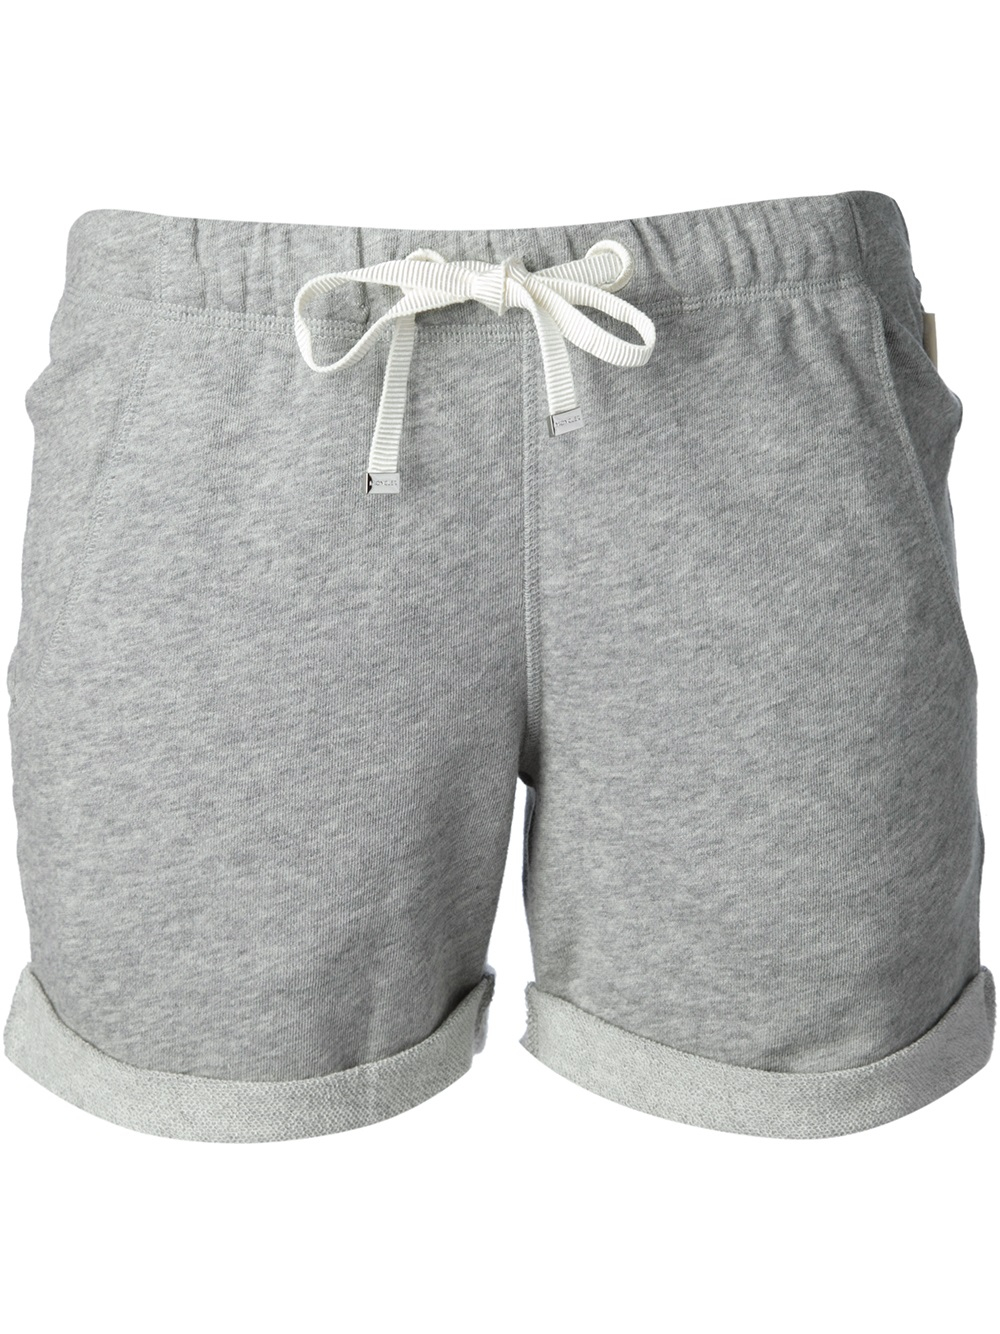 Lyst - Moncler Drawstring Shorts in Gray